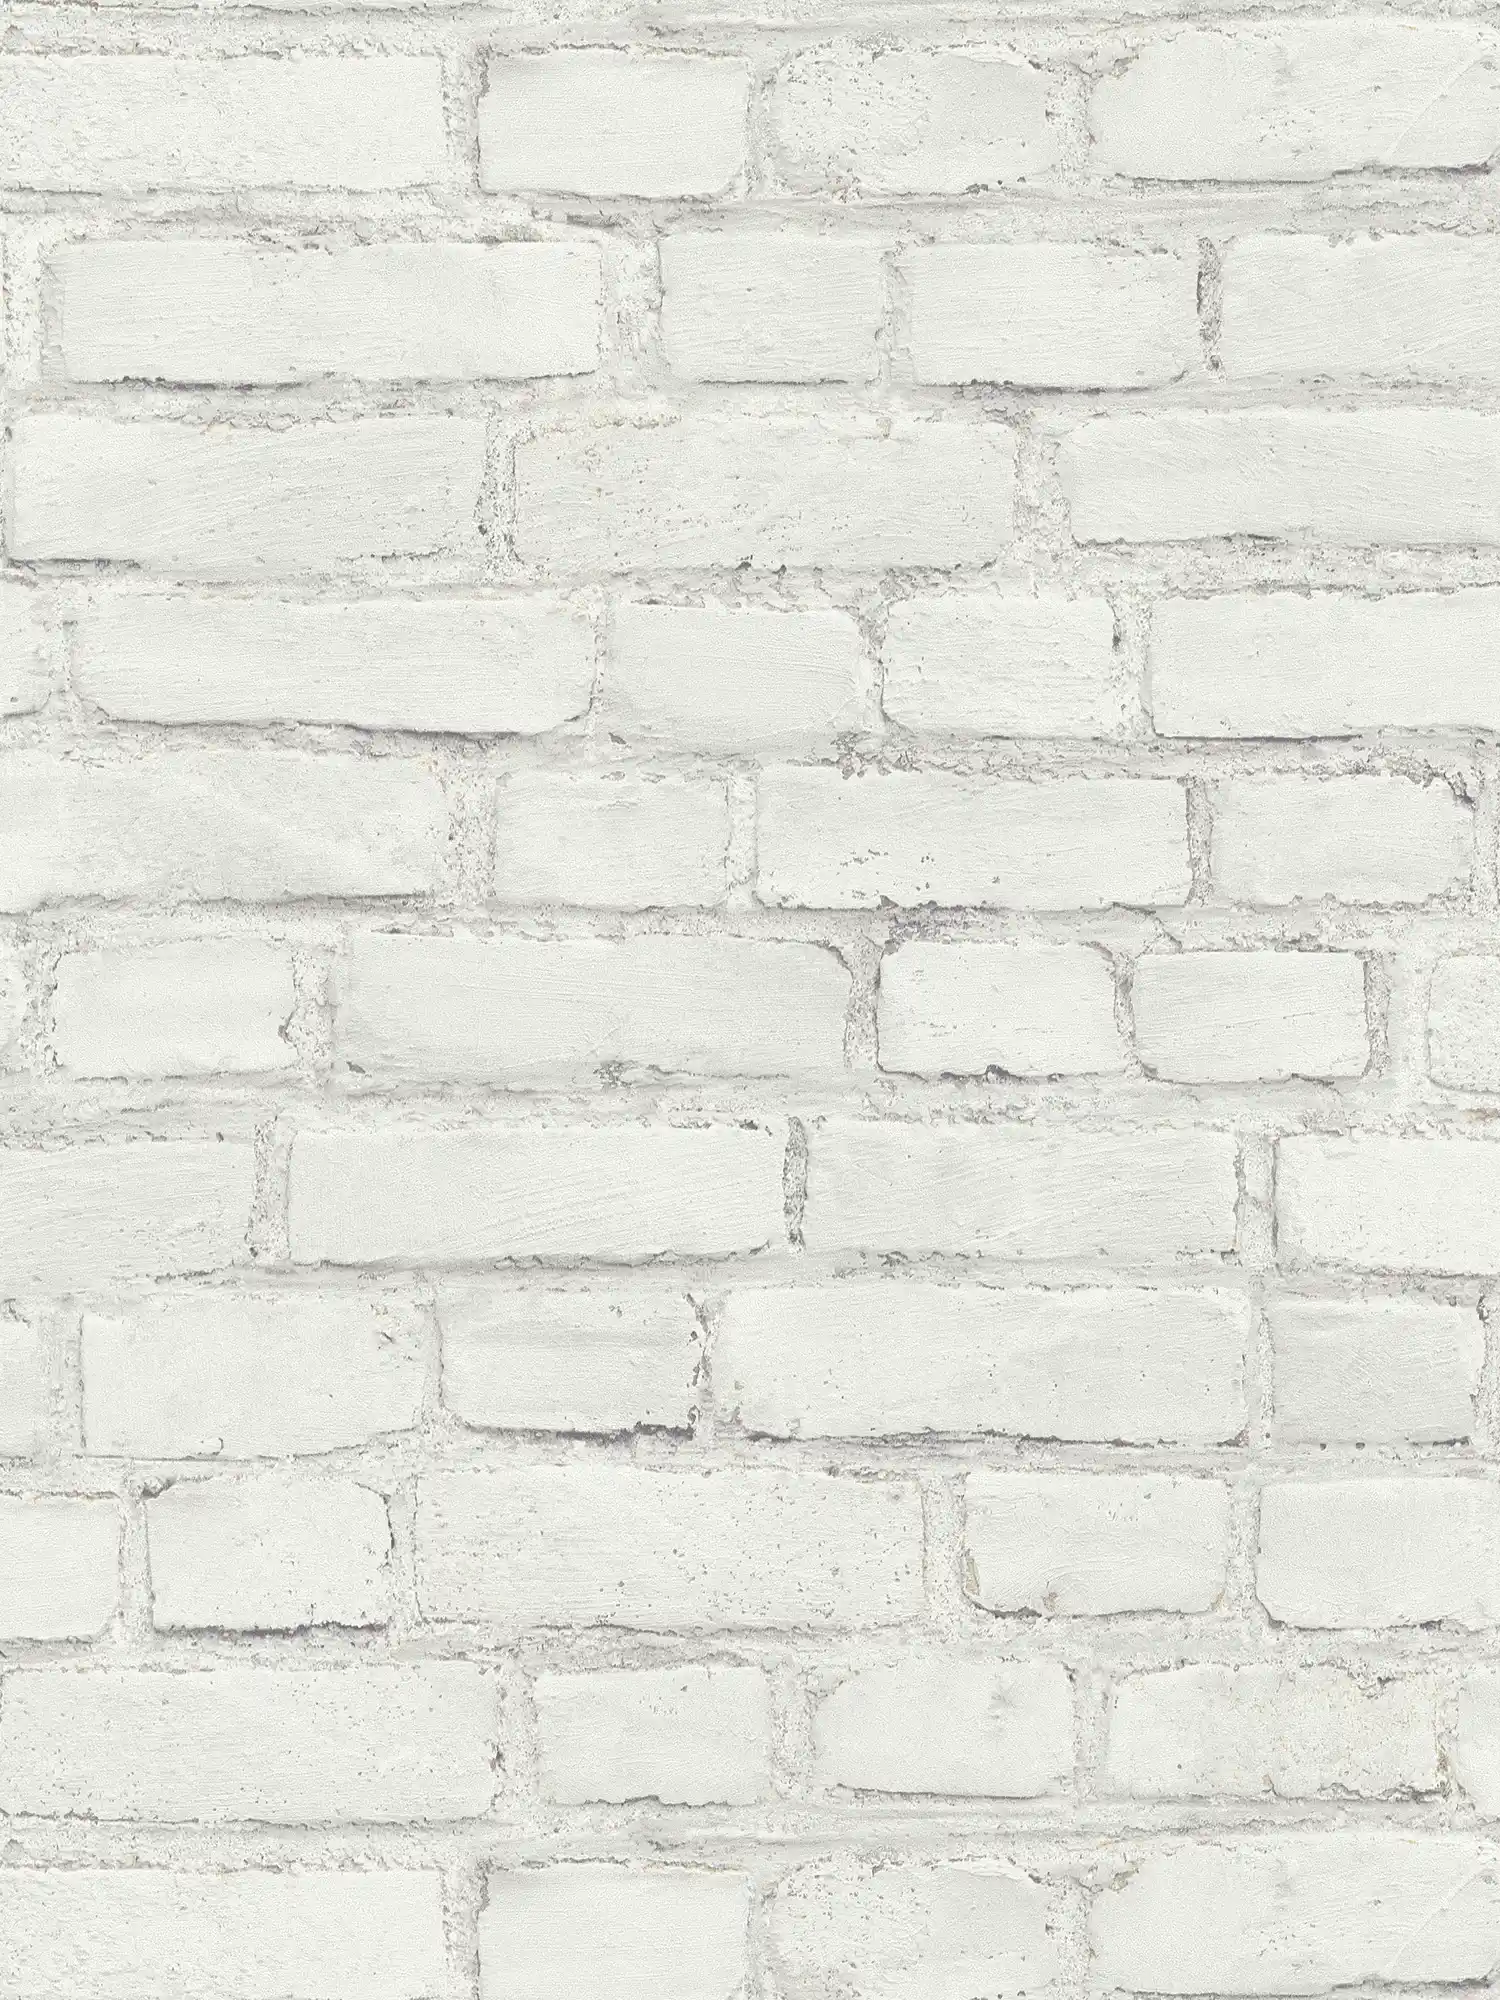         Wallpaper with wall optics, painted brick wall - white, grey
    